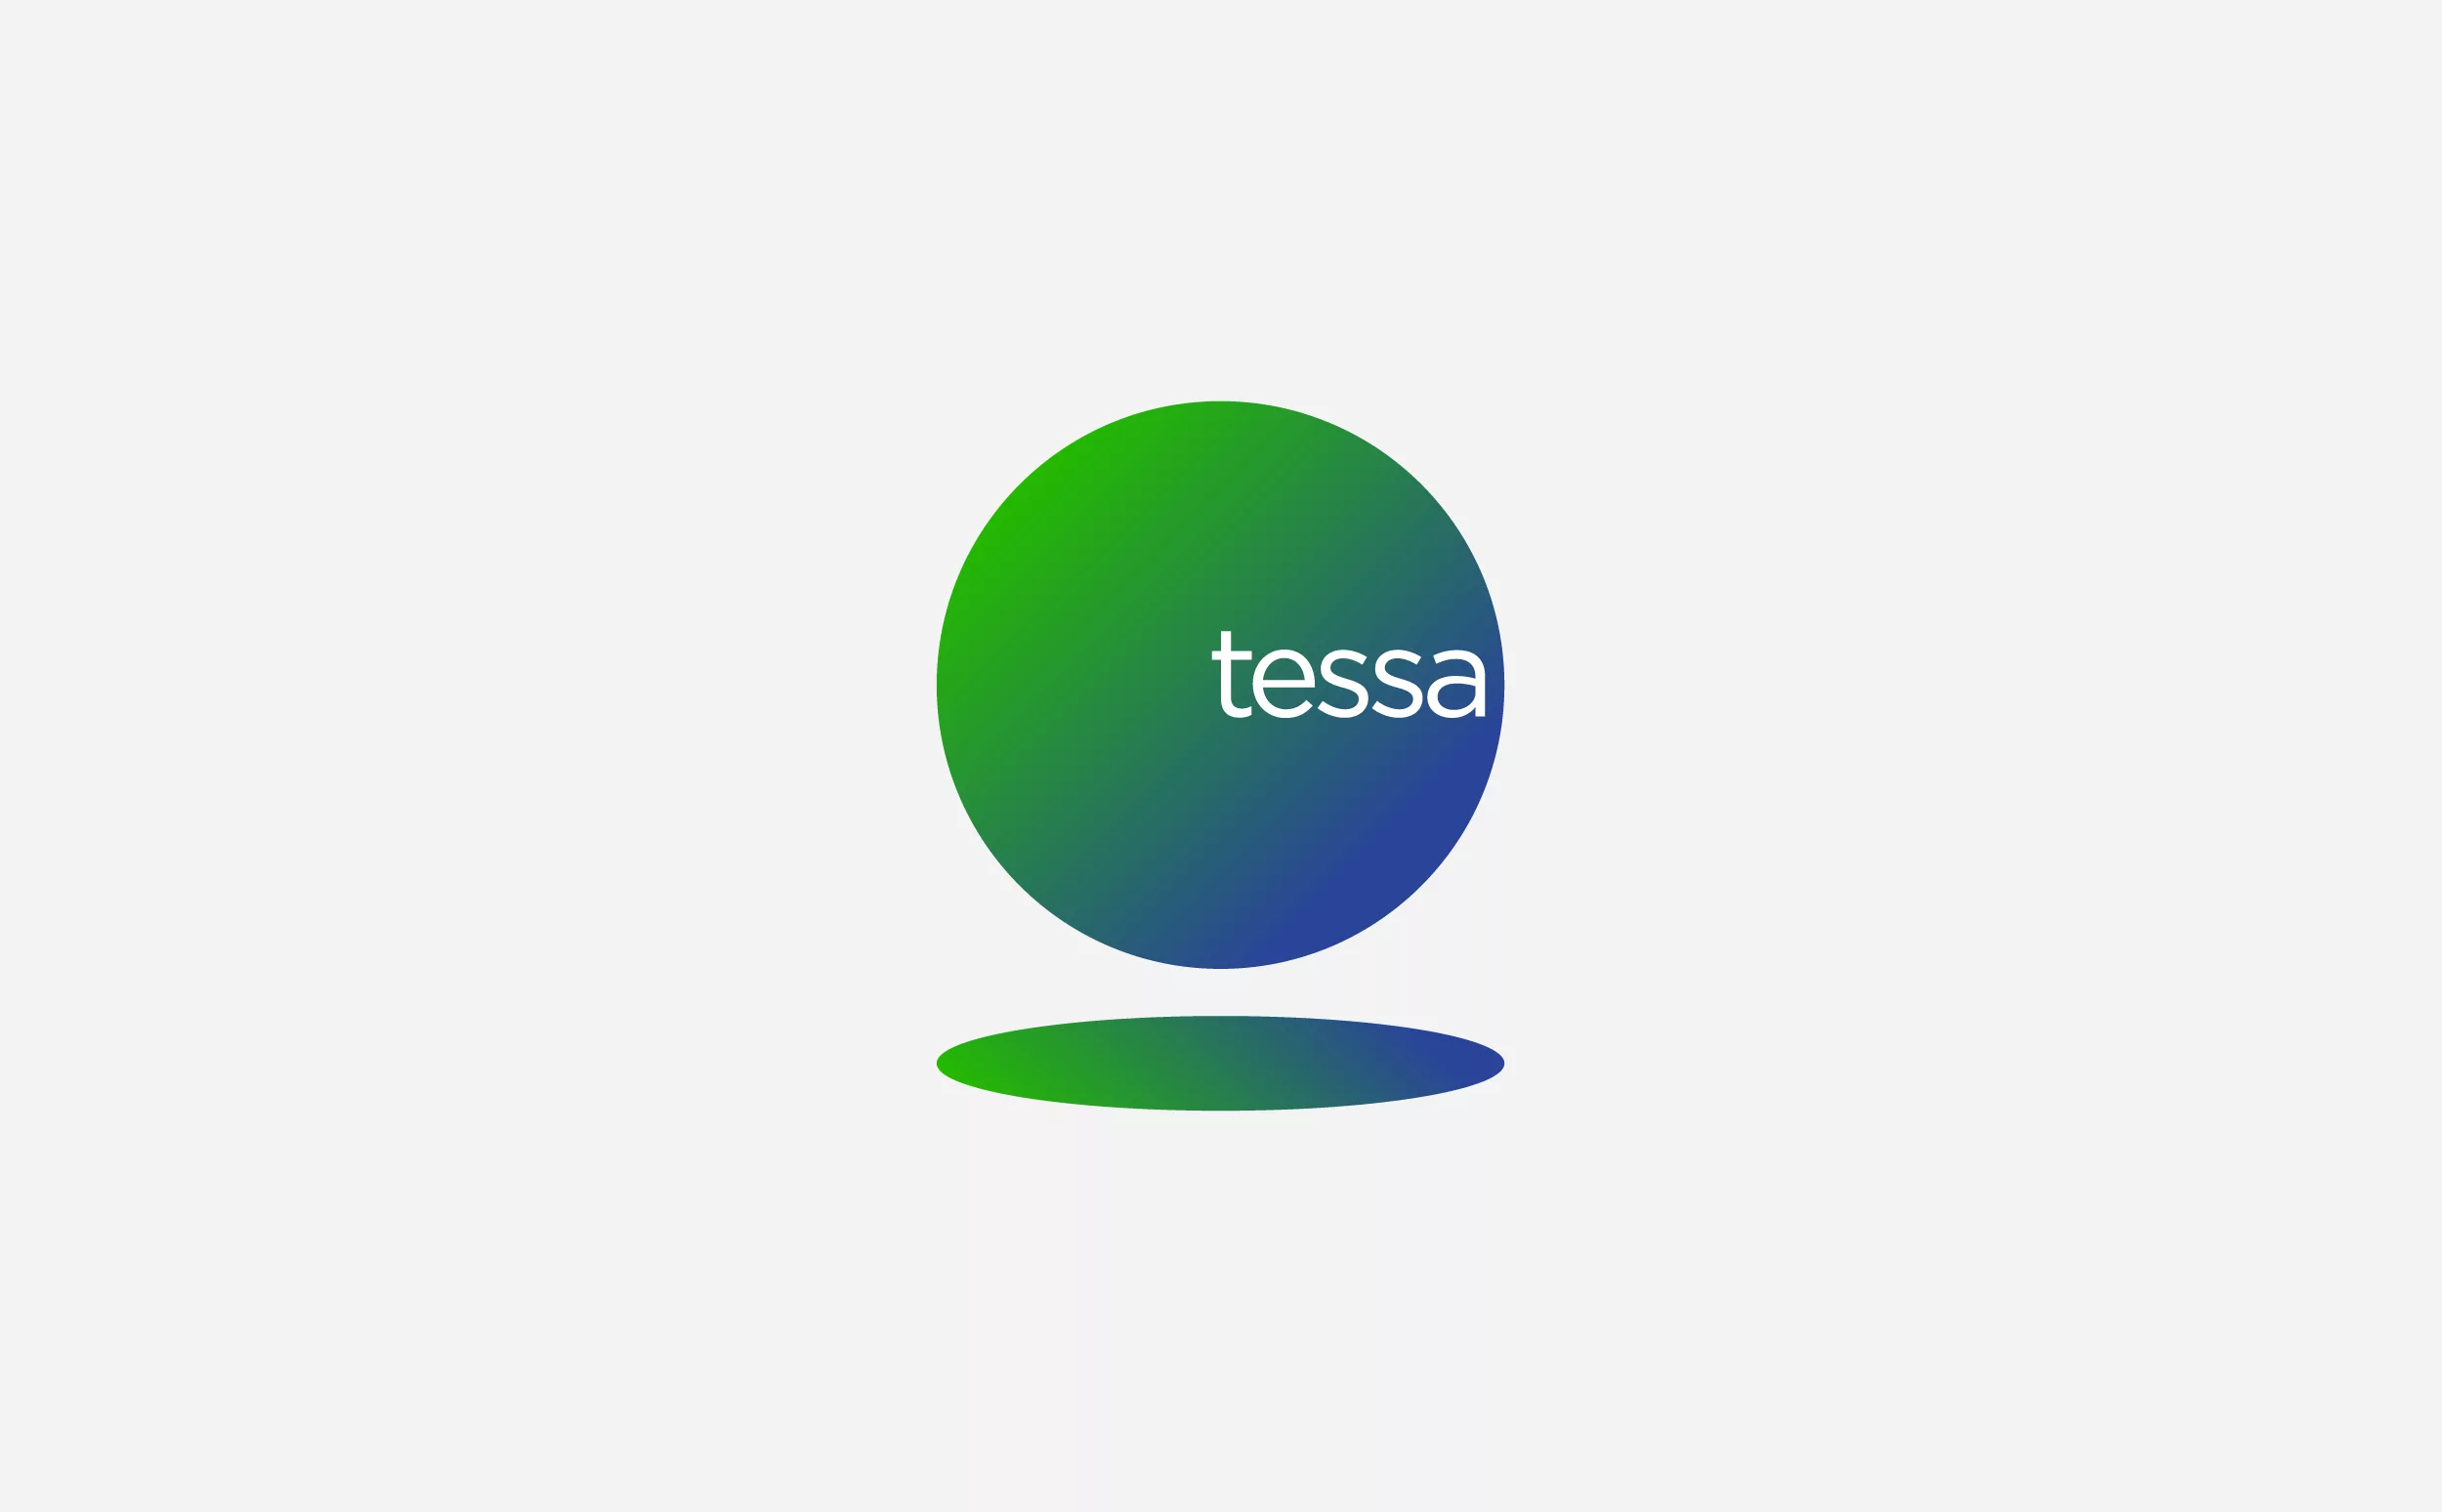 TESSA - Brand Identity by Peek Creative Limited